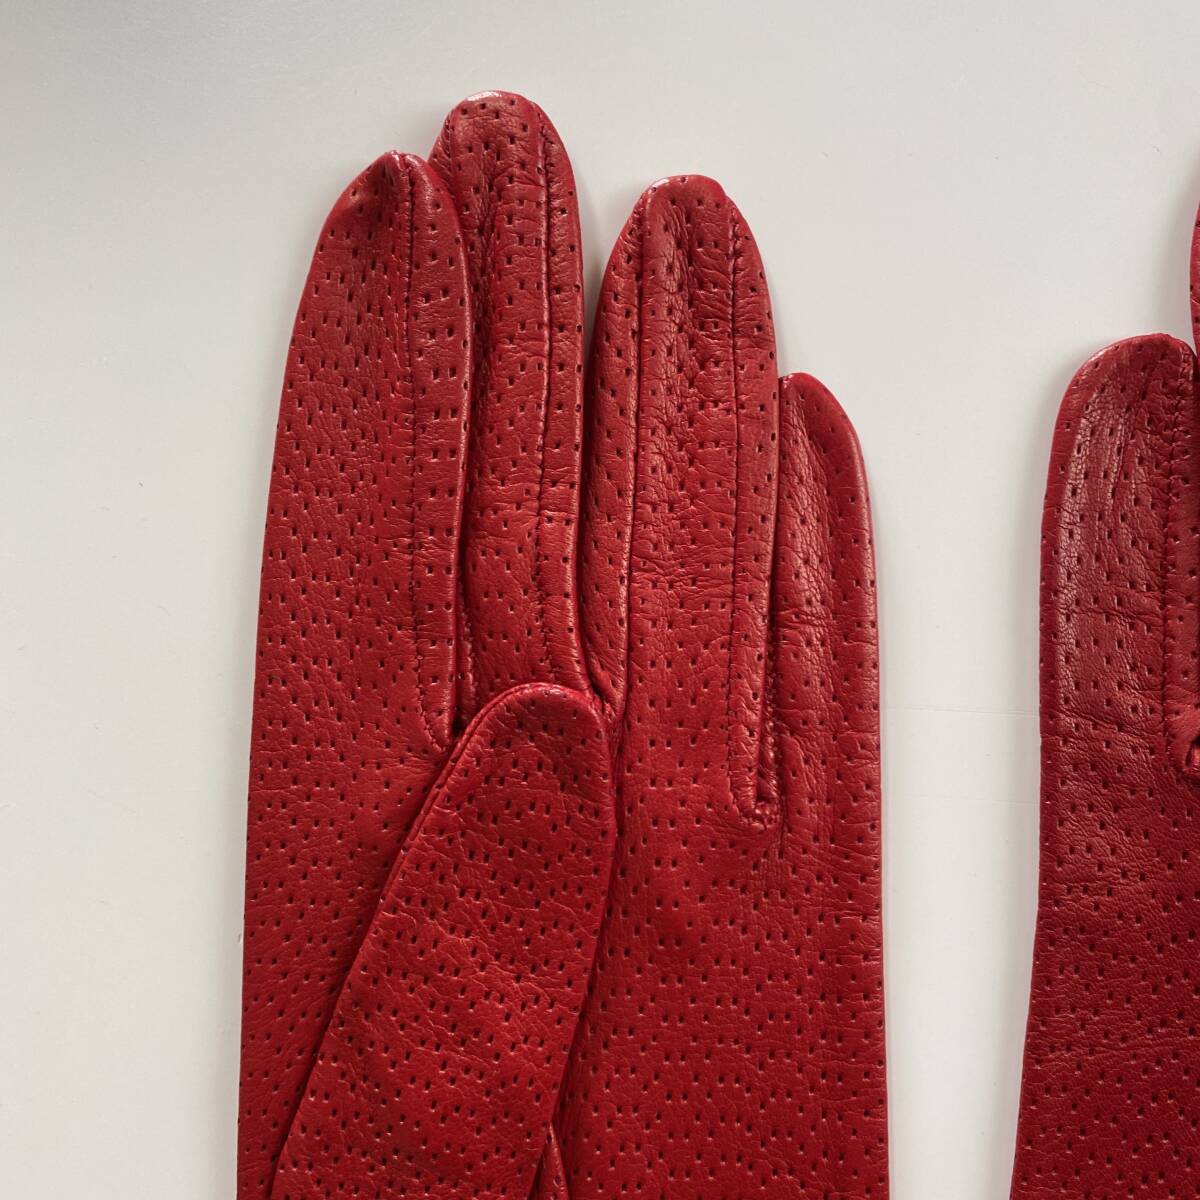 [ beautiful goods ] Italy CERUMO ne-taSERMONETA GLOVES leather glove leather gloves red size 7 lining less 